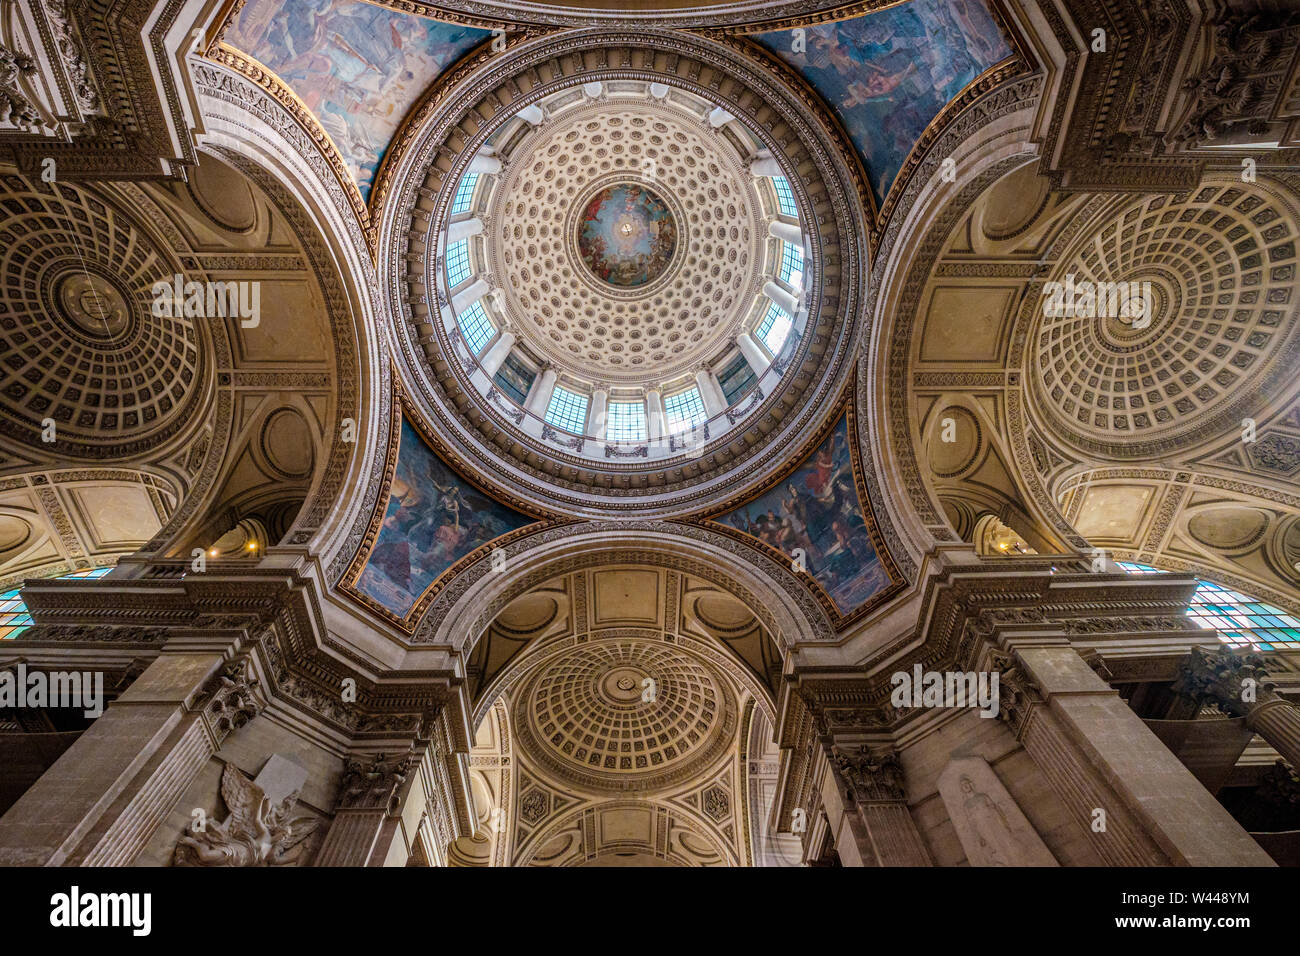 Interior Of The Pantheon Pantheon In Paris France Stock